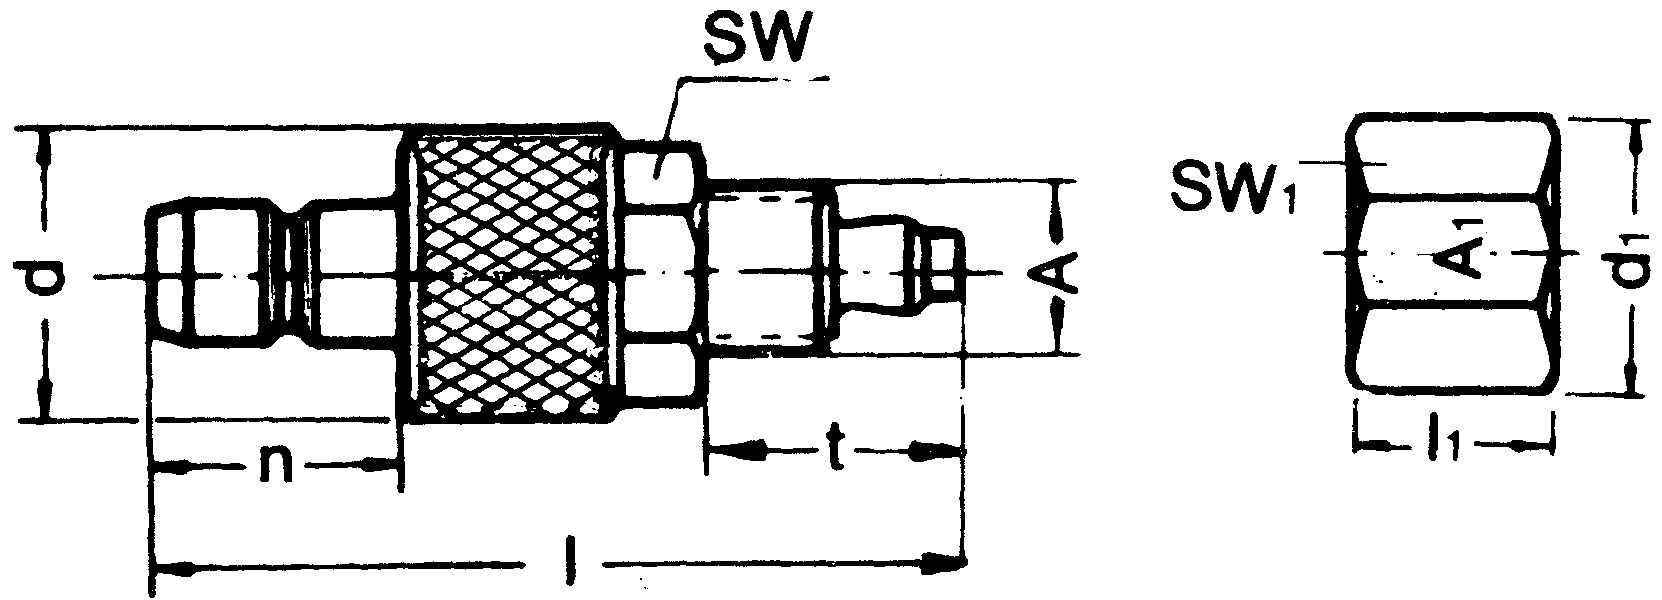 LV-004-2-SW004-21-1-EB